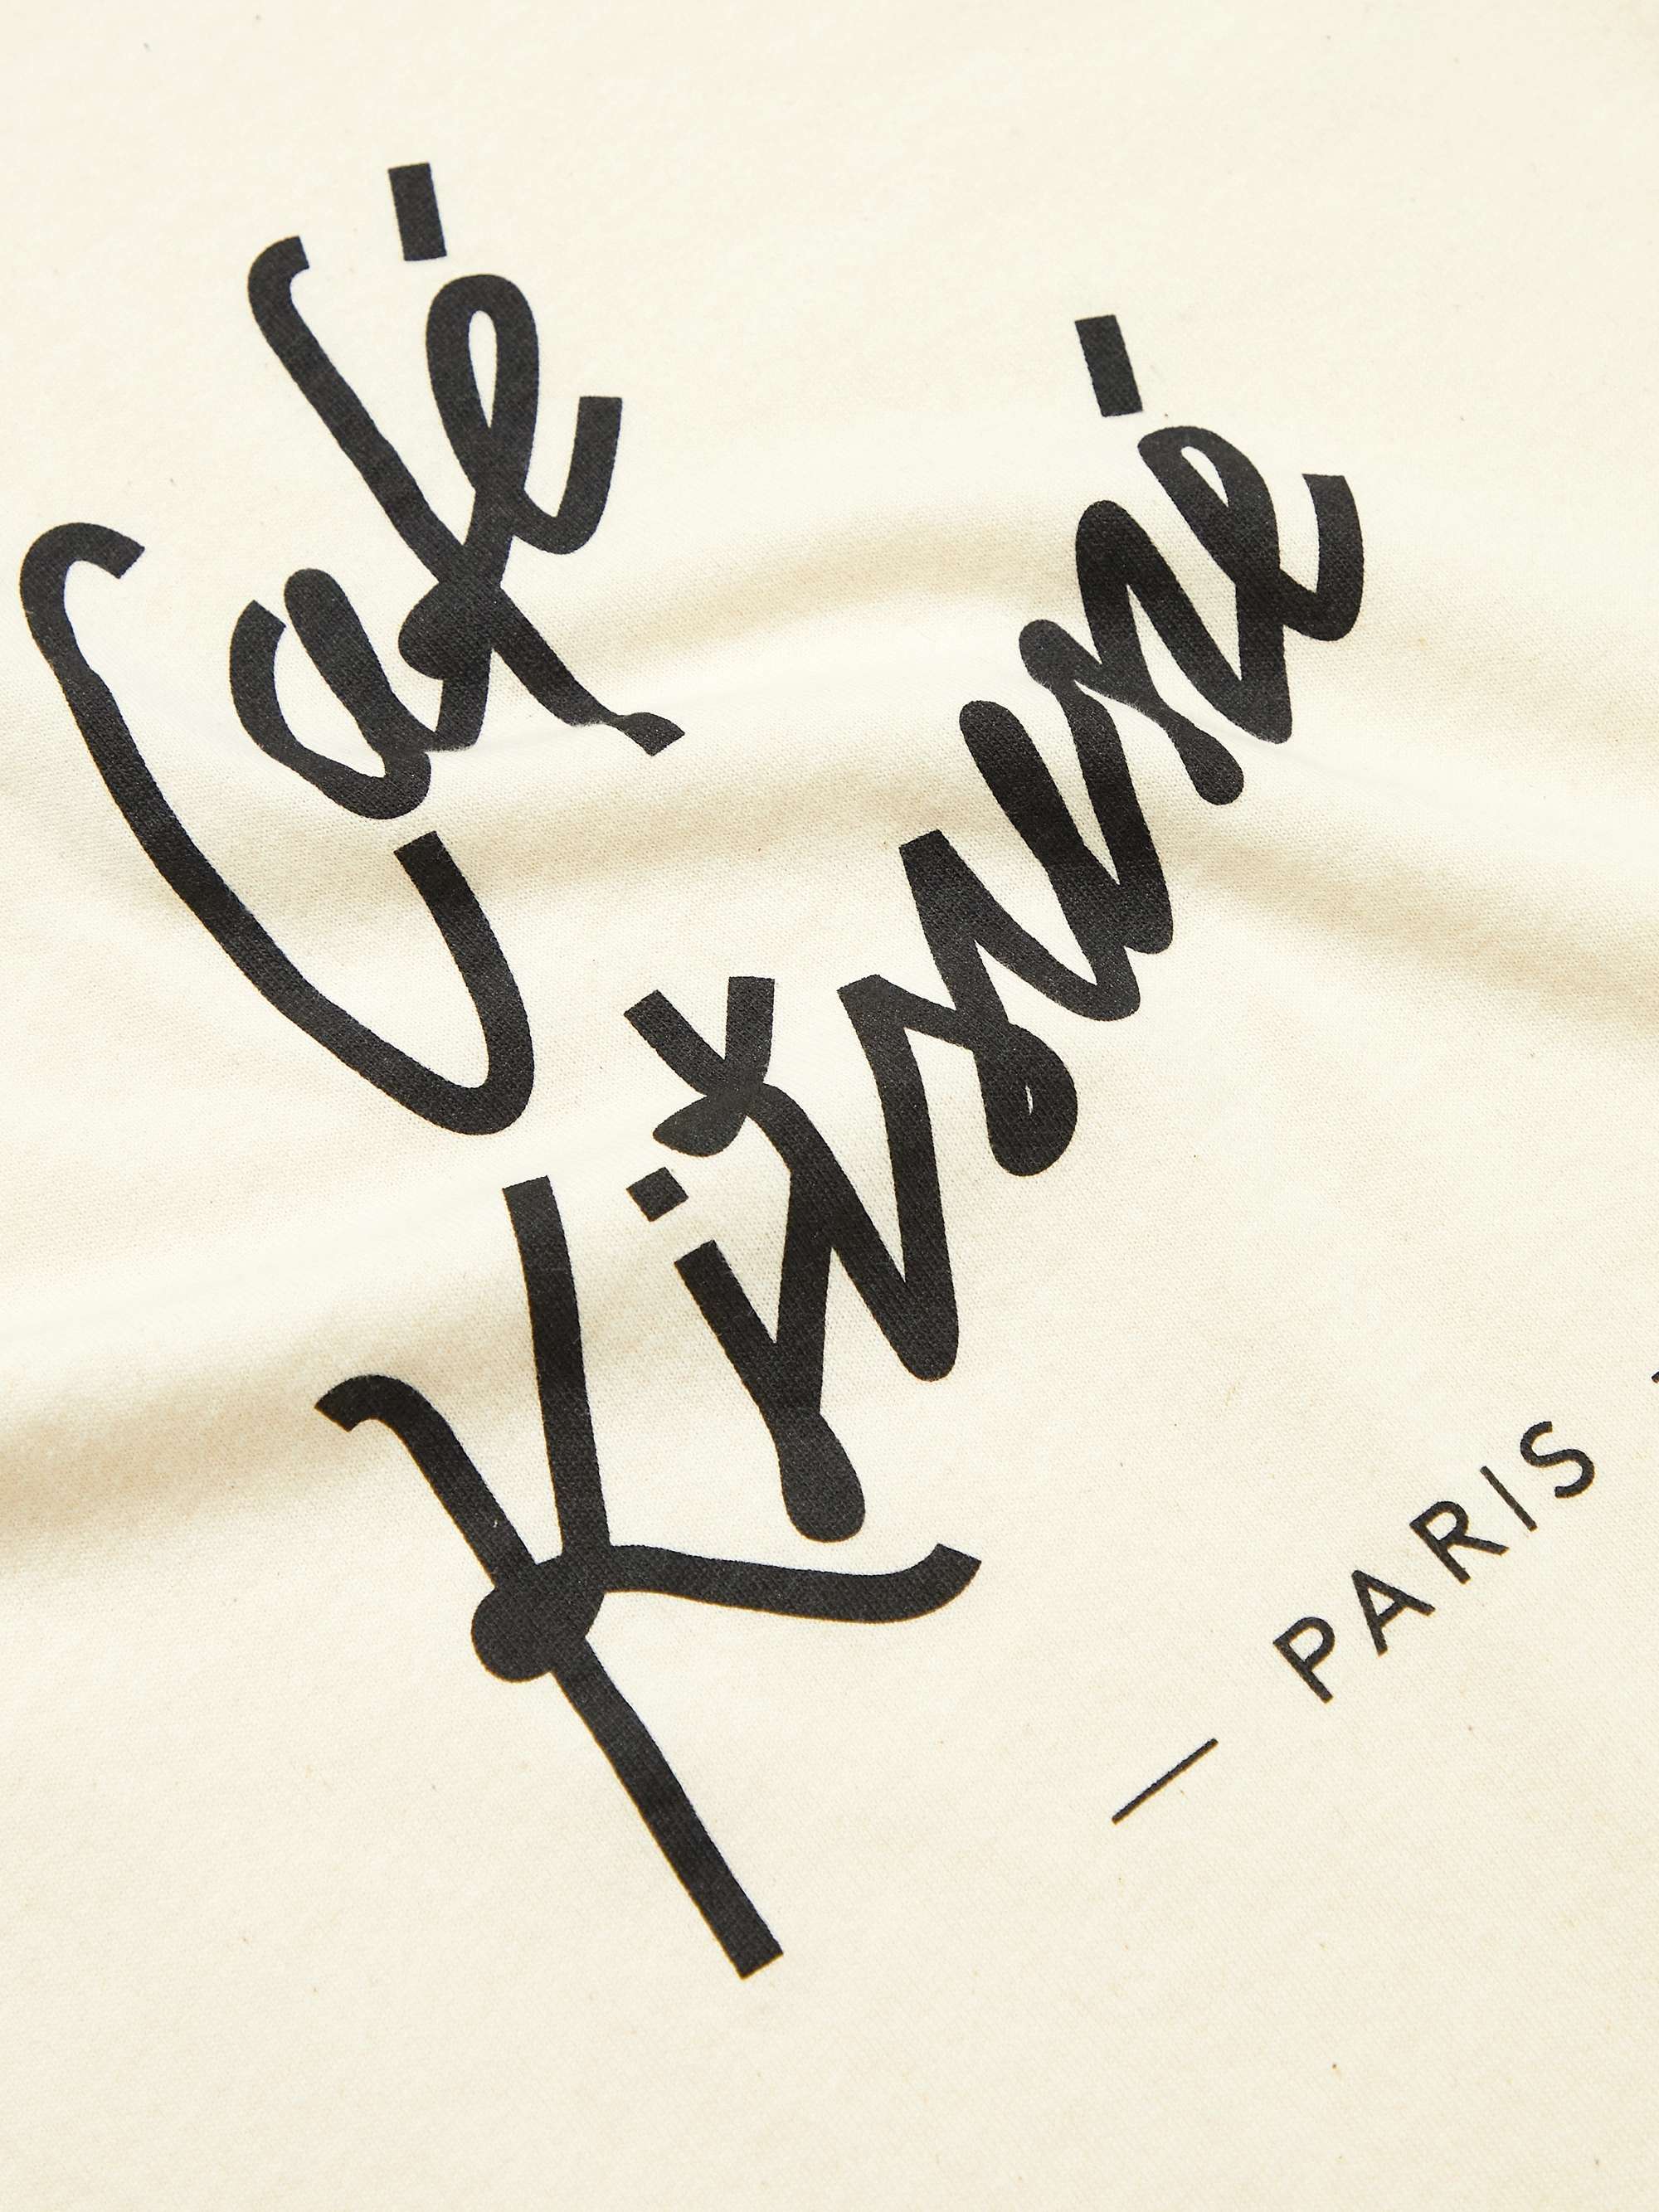 CAFÉ KITSUNÉ Logo-Print Cotton-Jersey T-Shirt